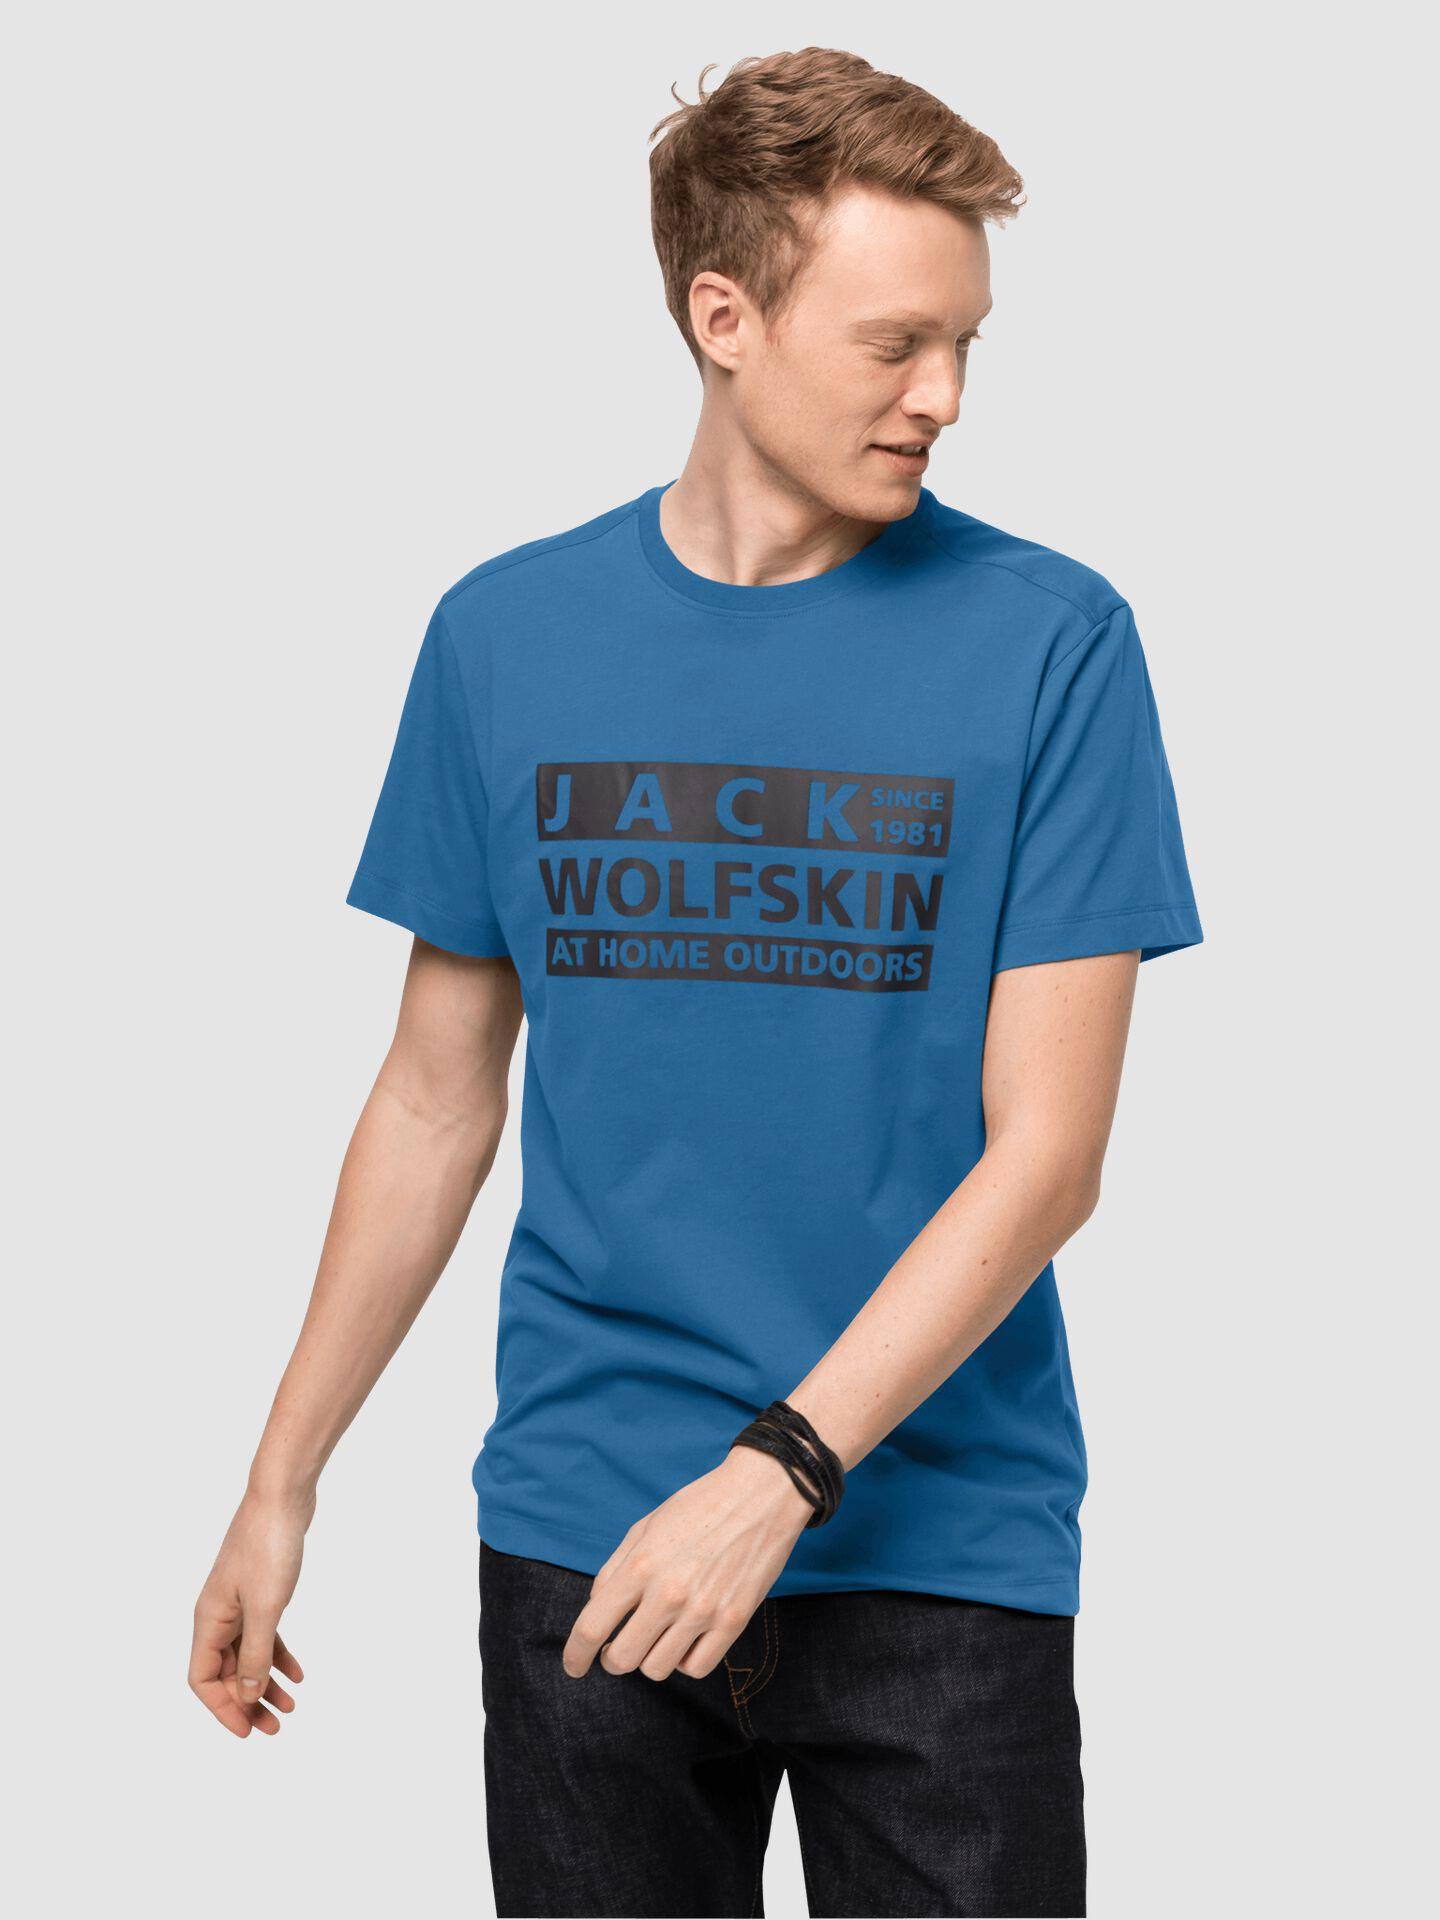 Selected image for JACK WOLFSKIN Muška majica BRAND T plava